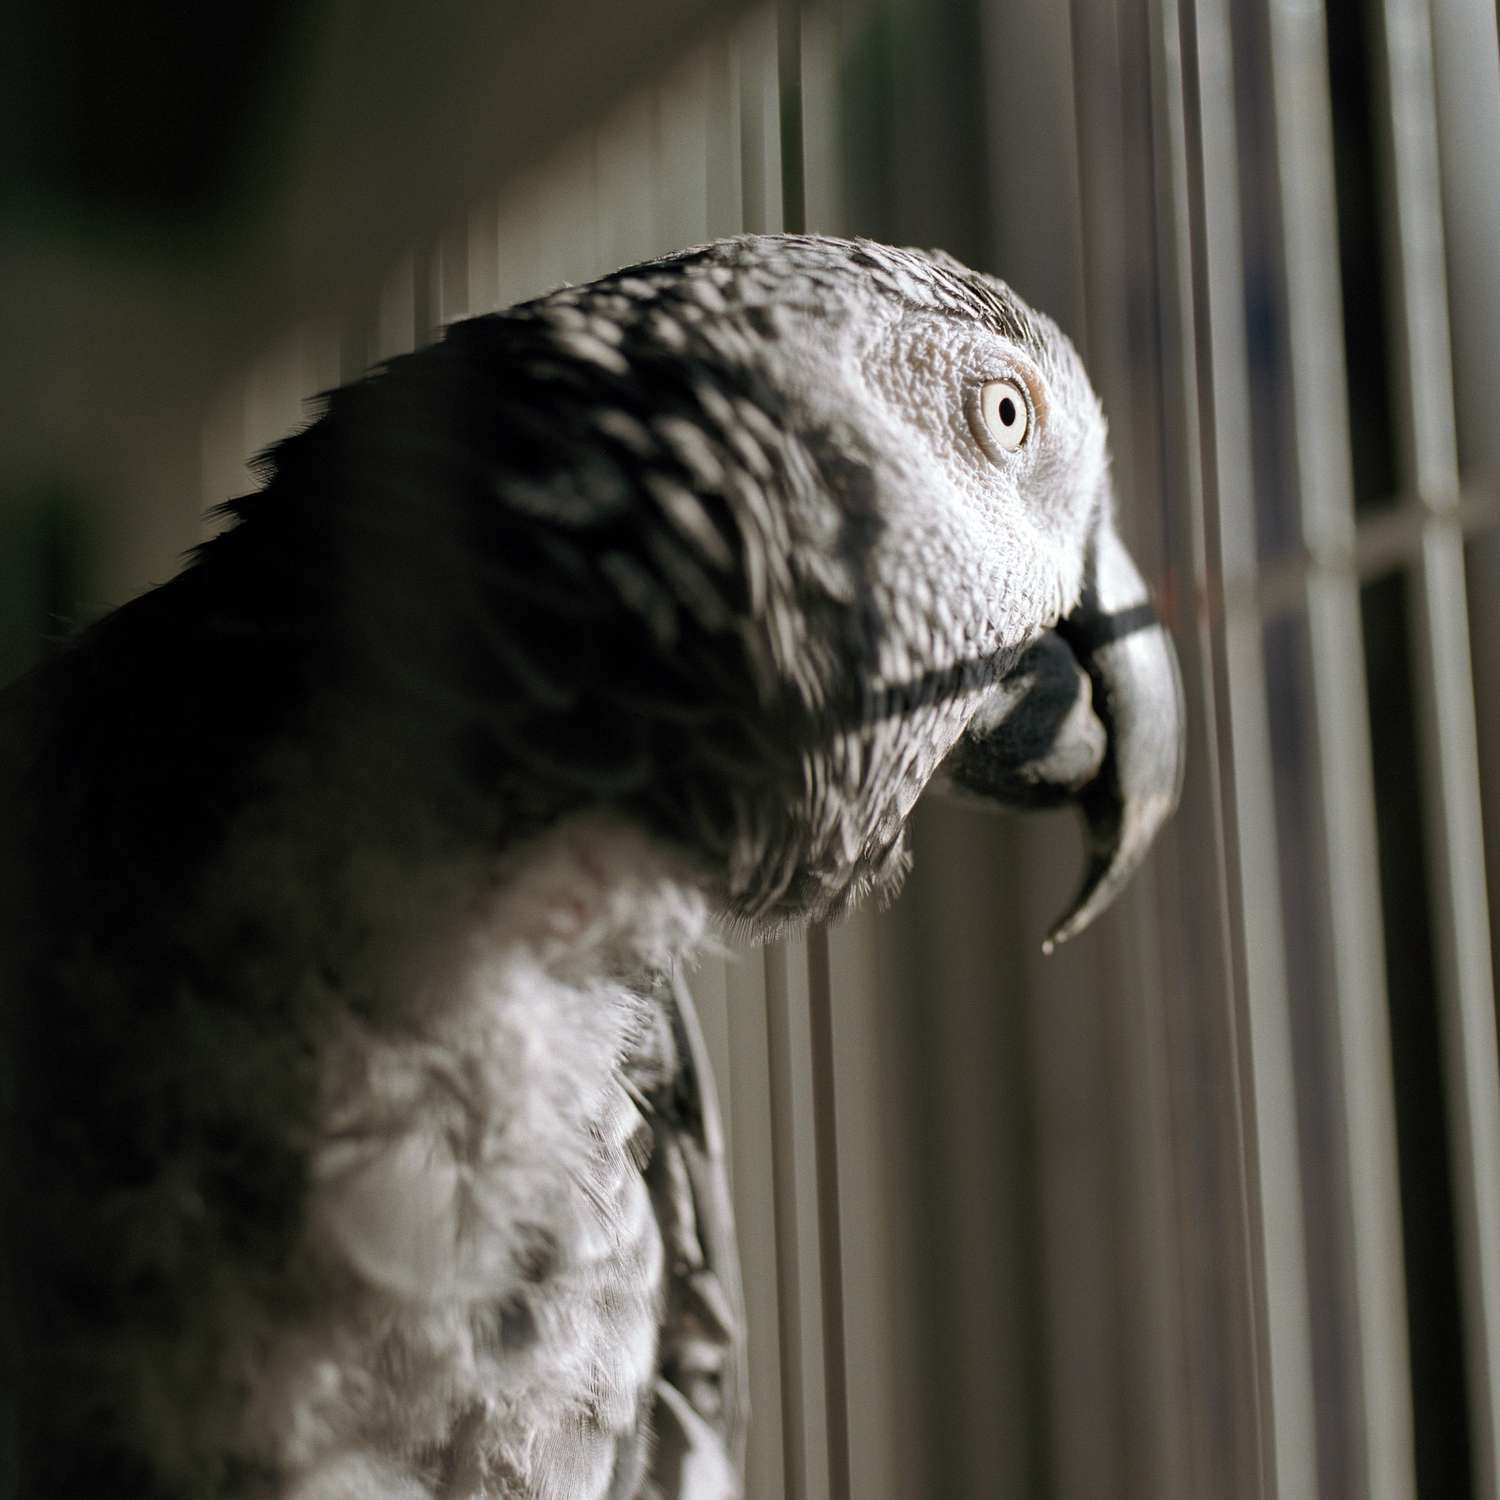 makiandampars - bird depression